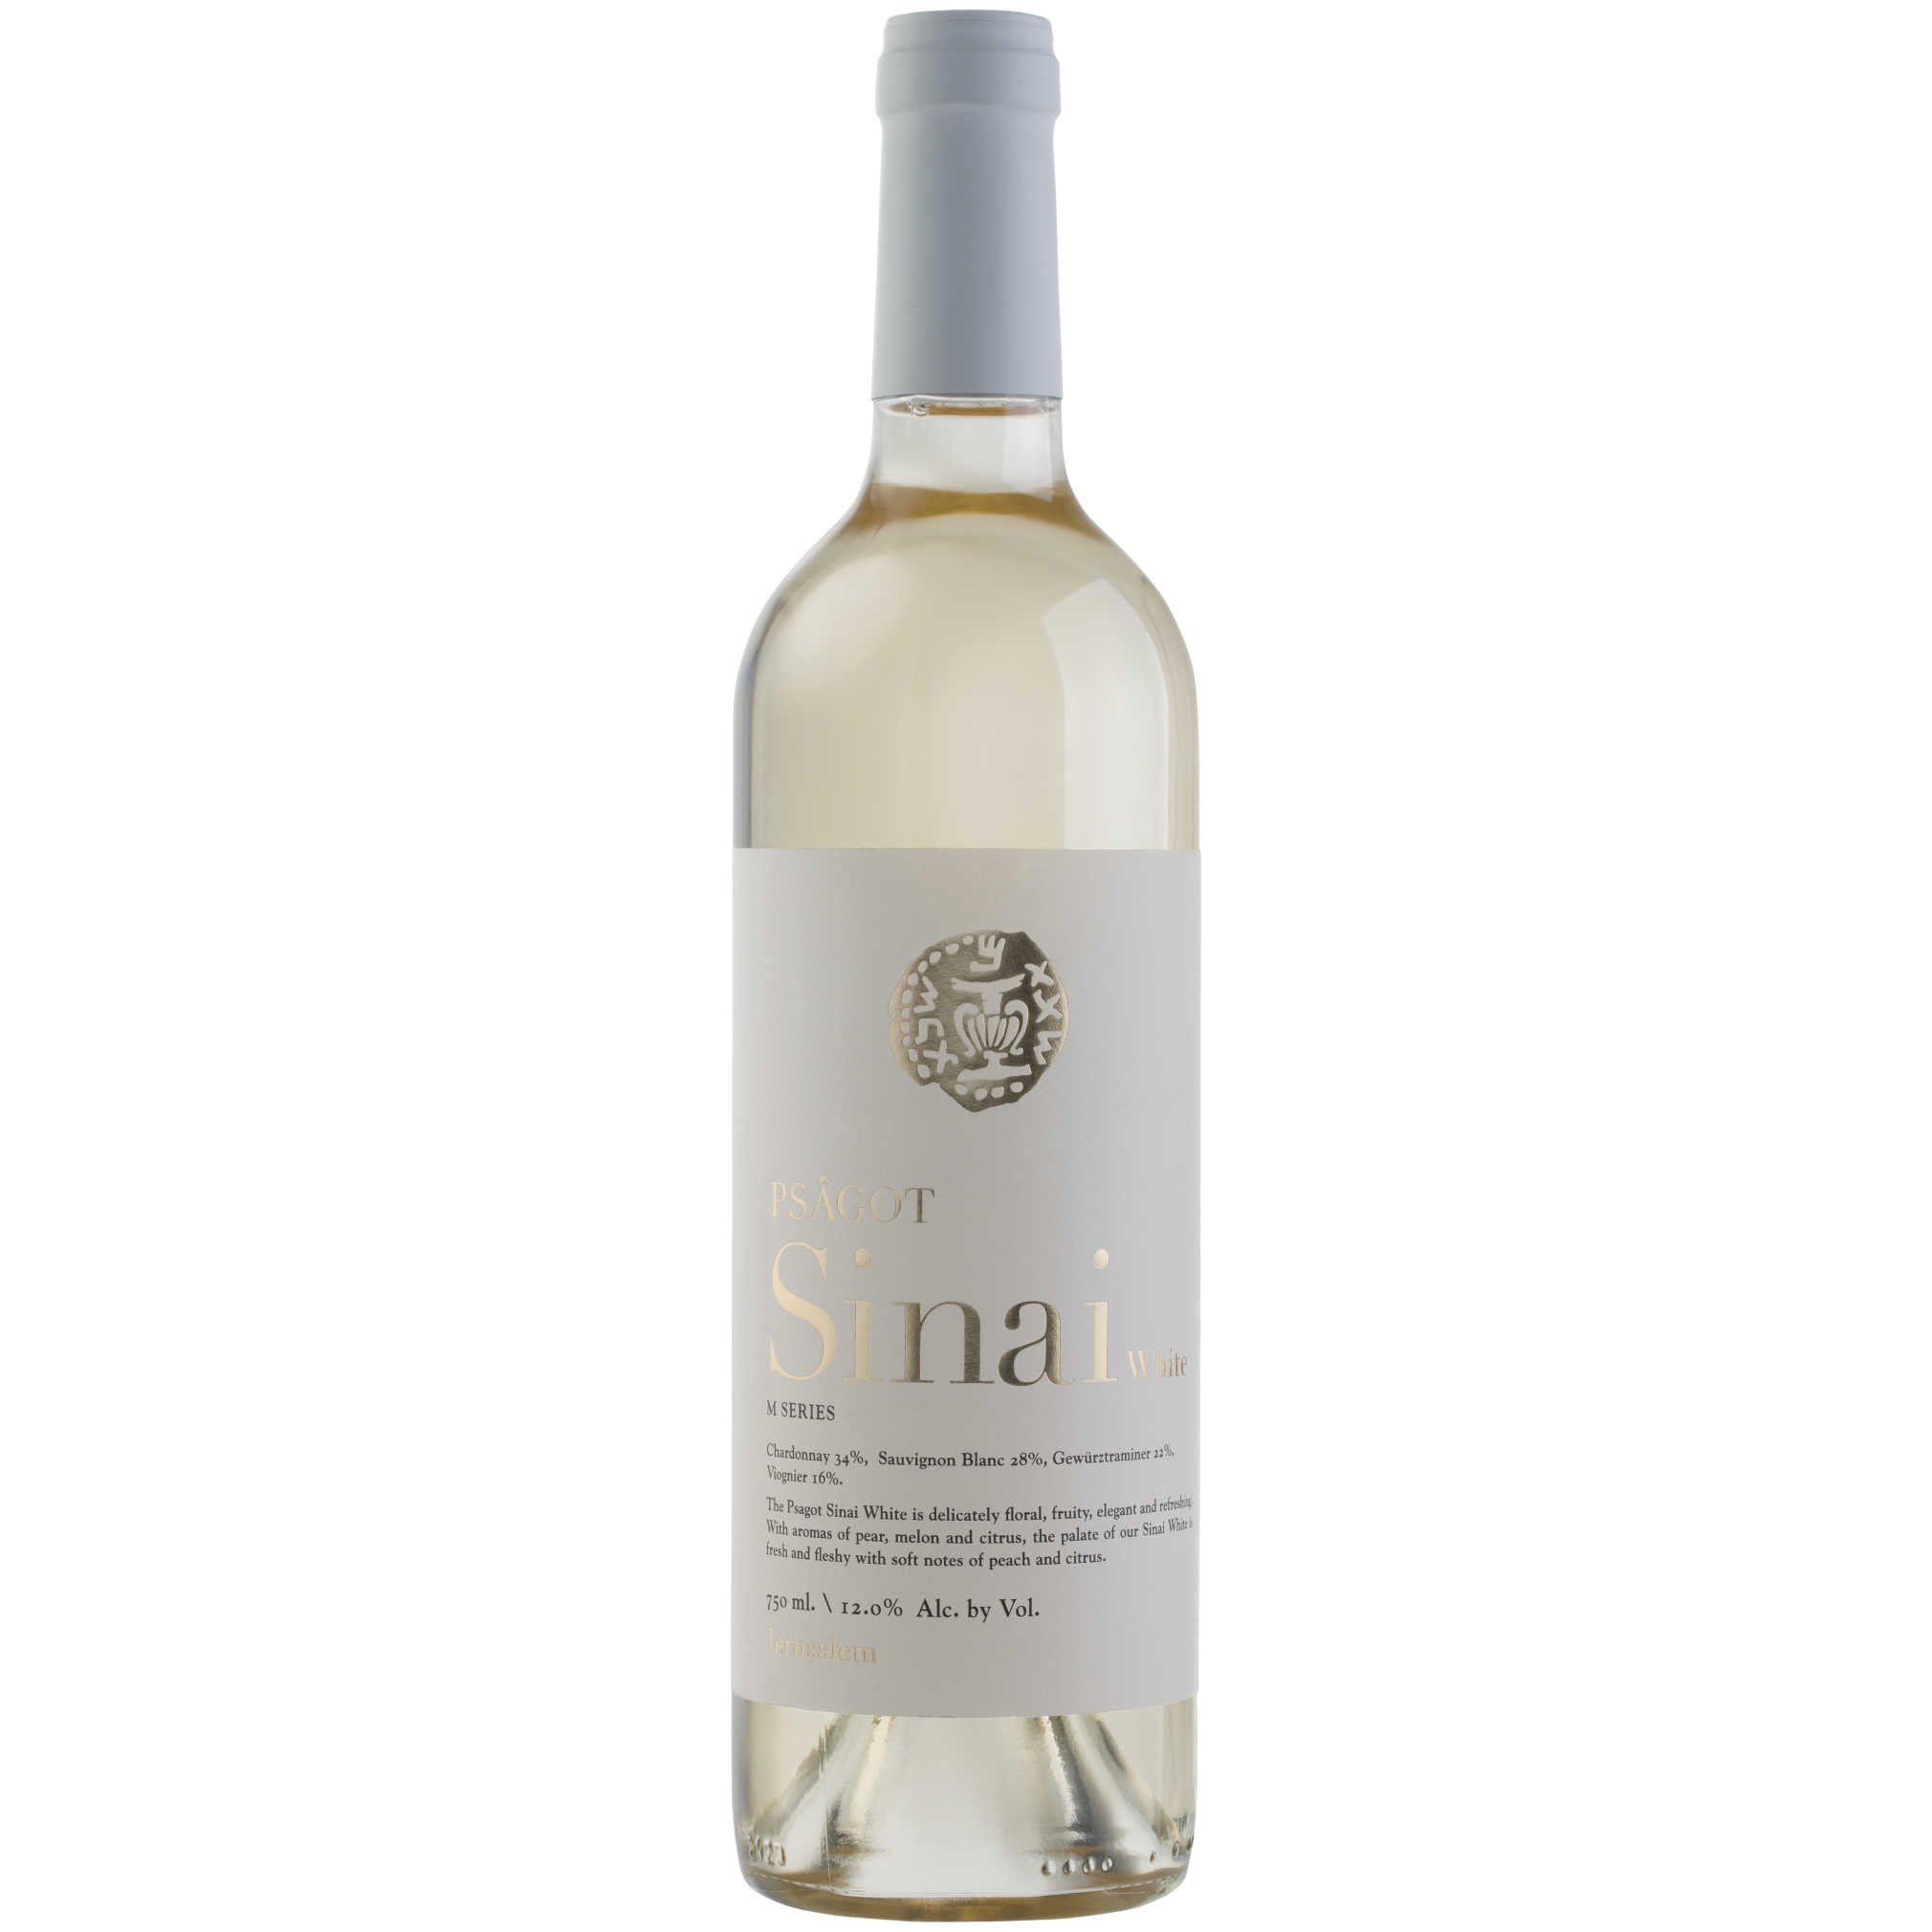 Psagot Sinai White - A Kosher Wine From Israel